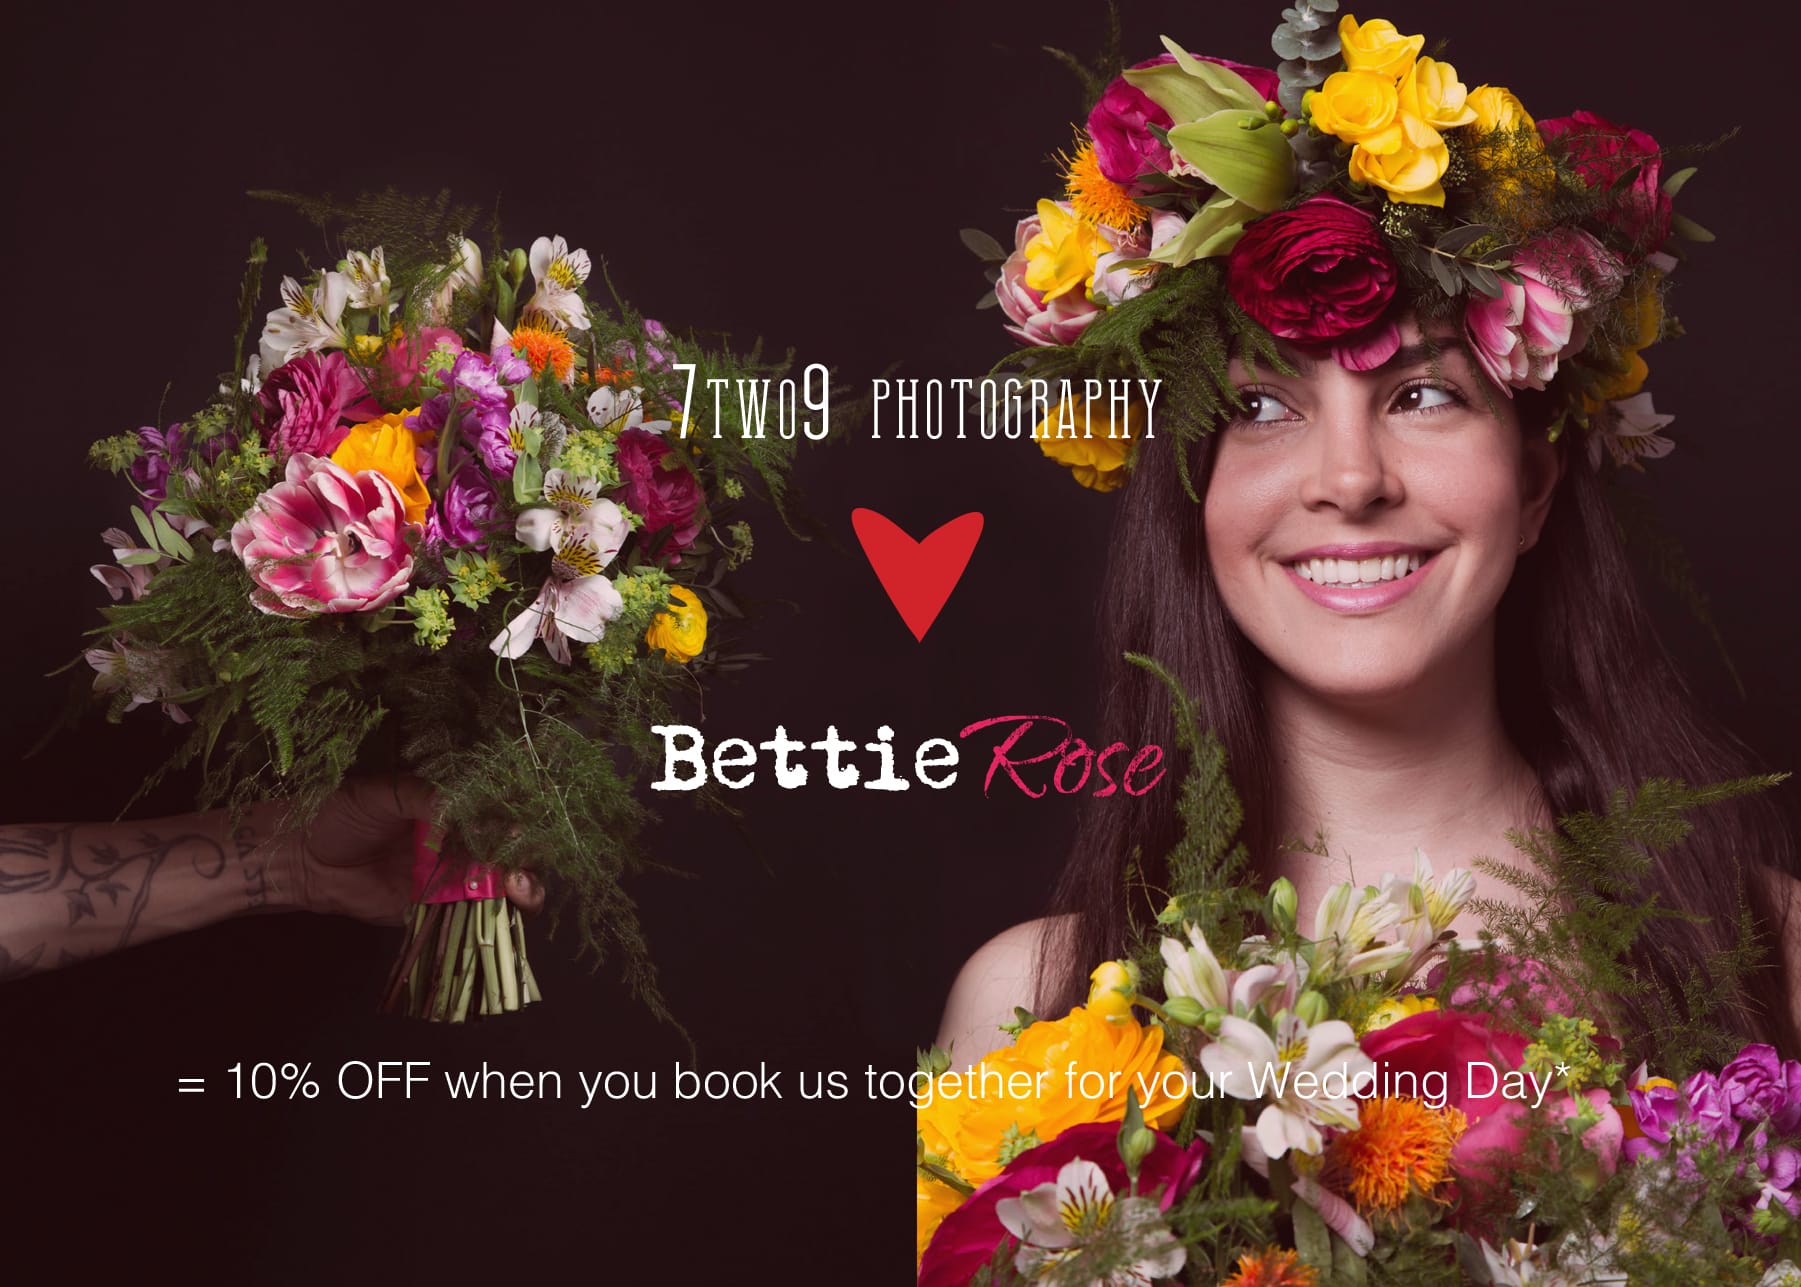 discount wedding flowers, bright coloured wedding flowers, brighton